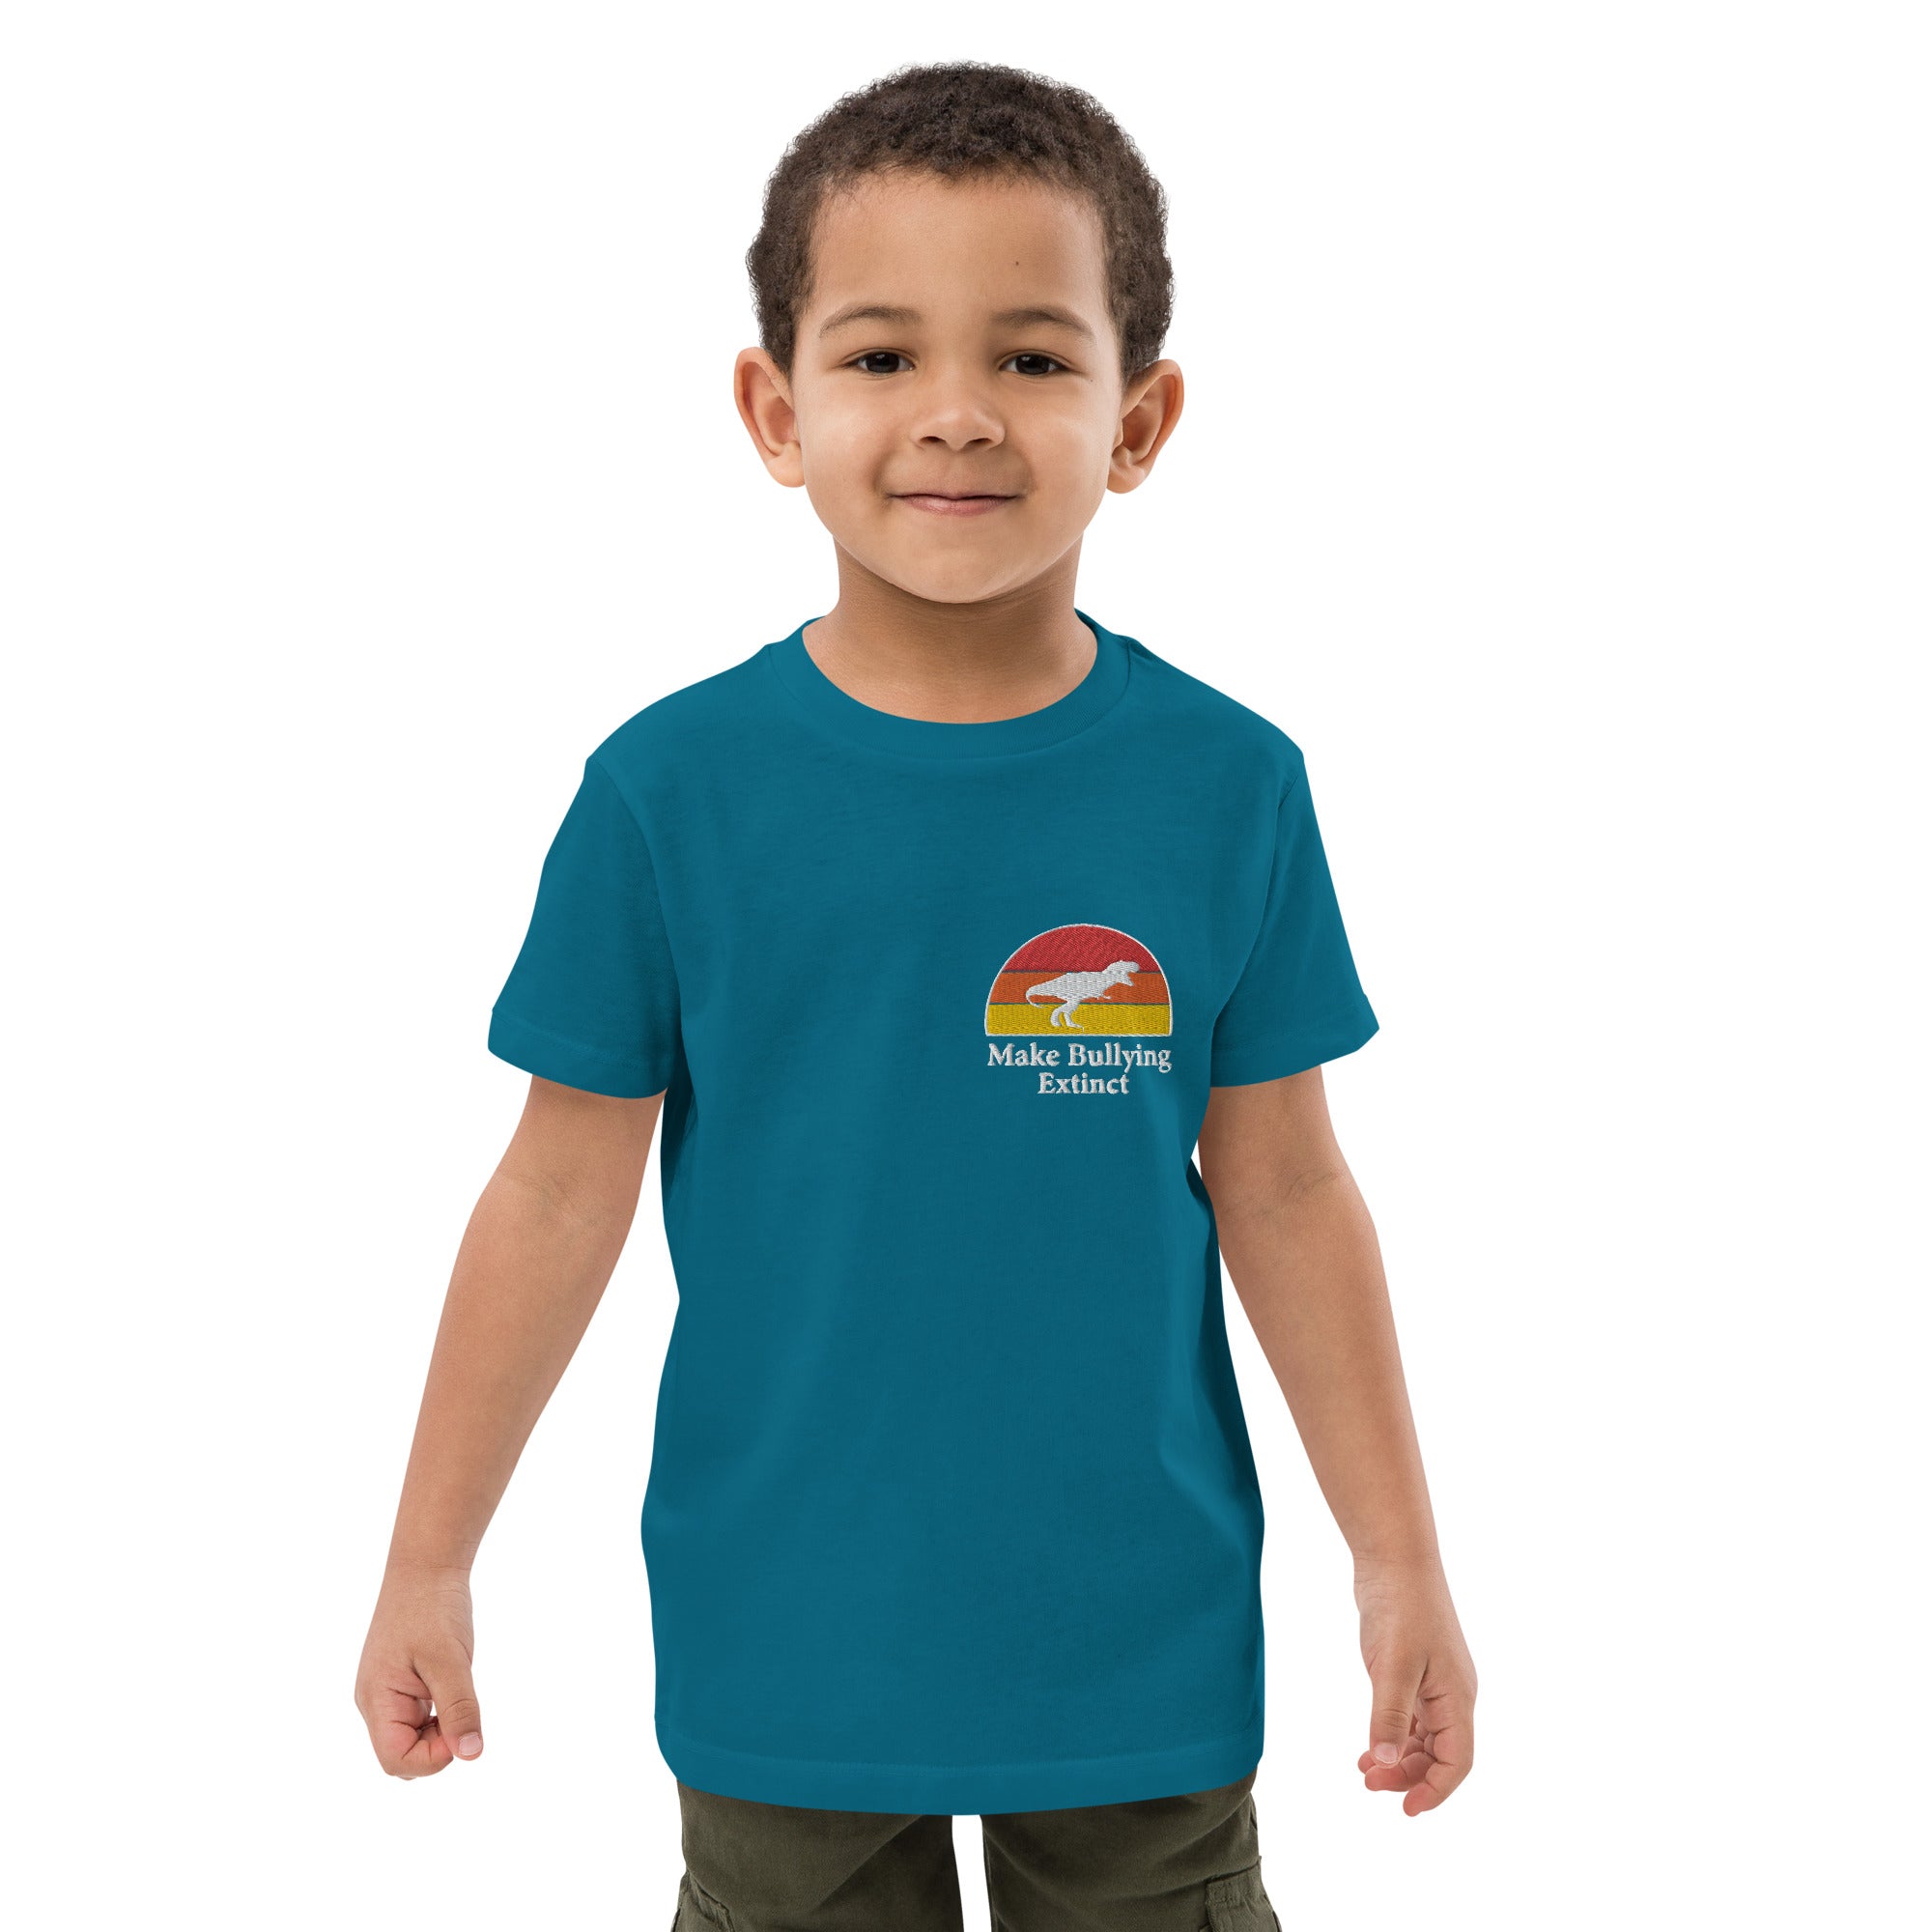 Make Bullying Extinct Organic Cotton Kids T-shirt